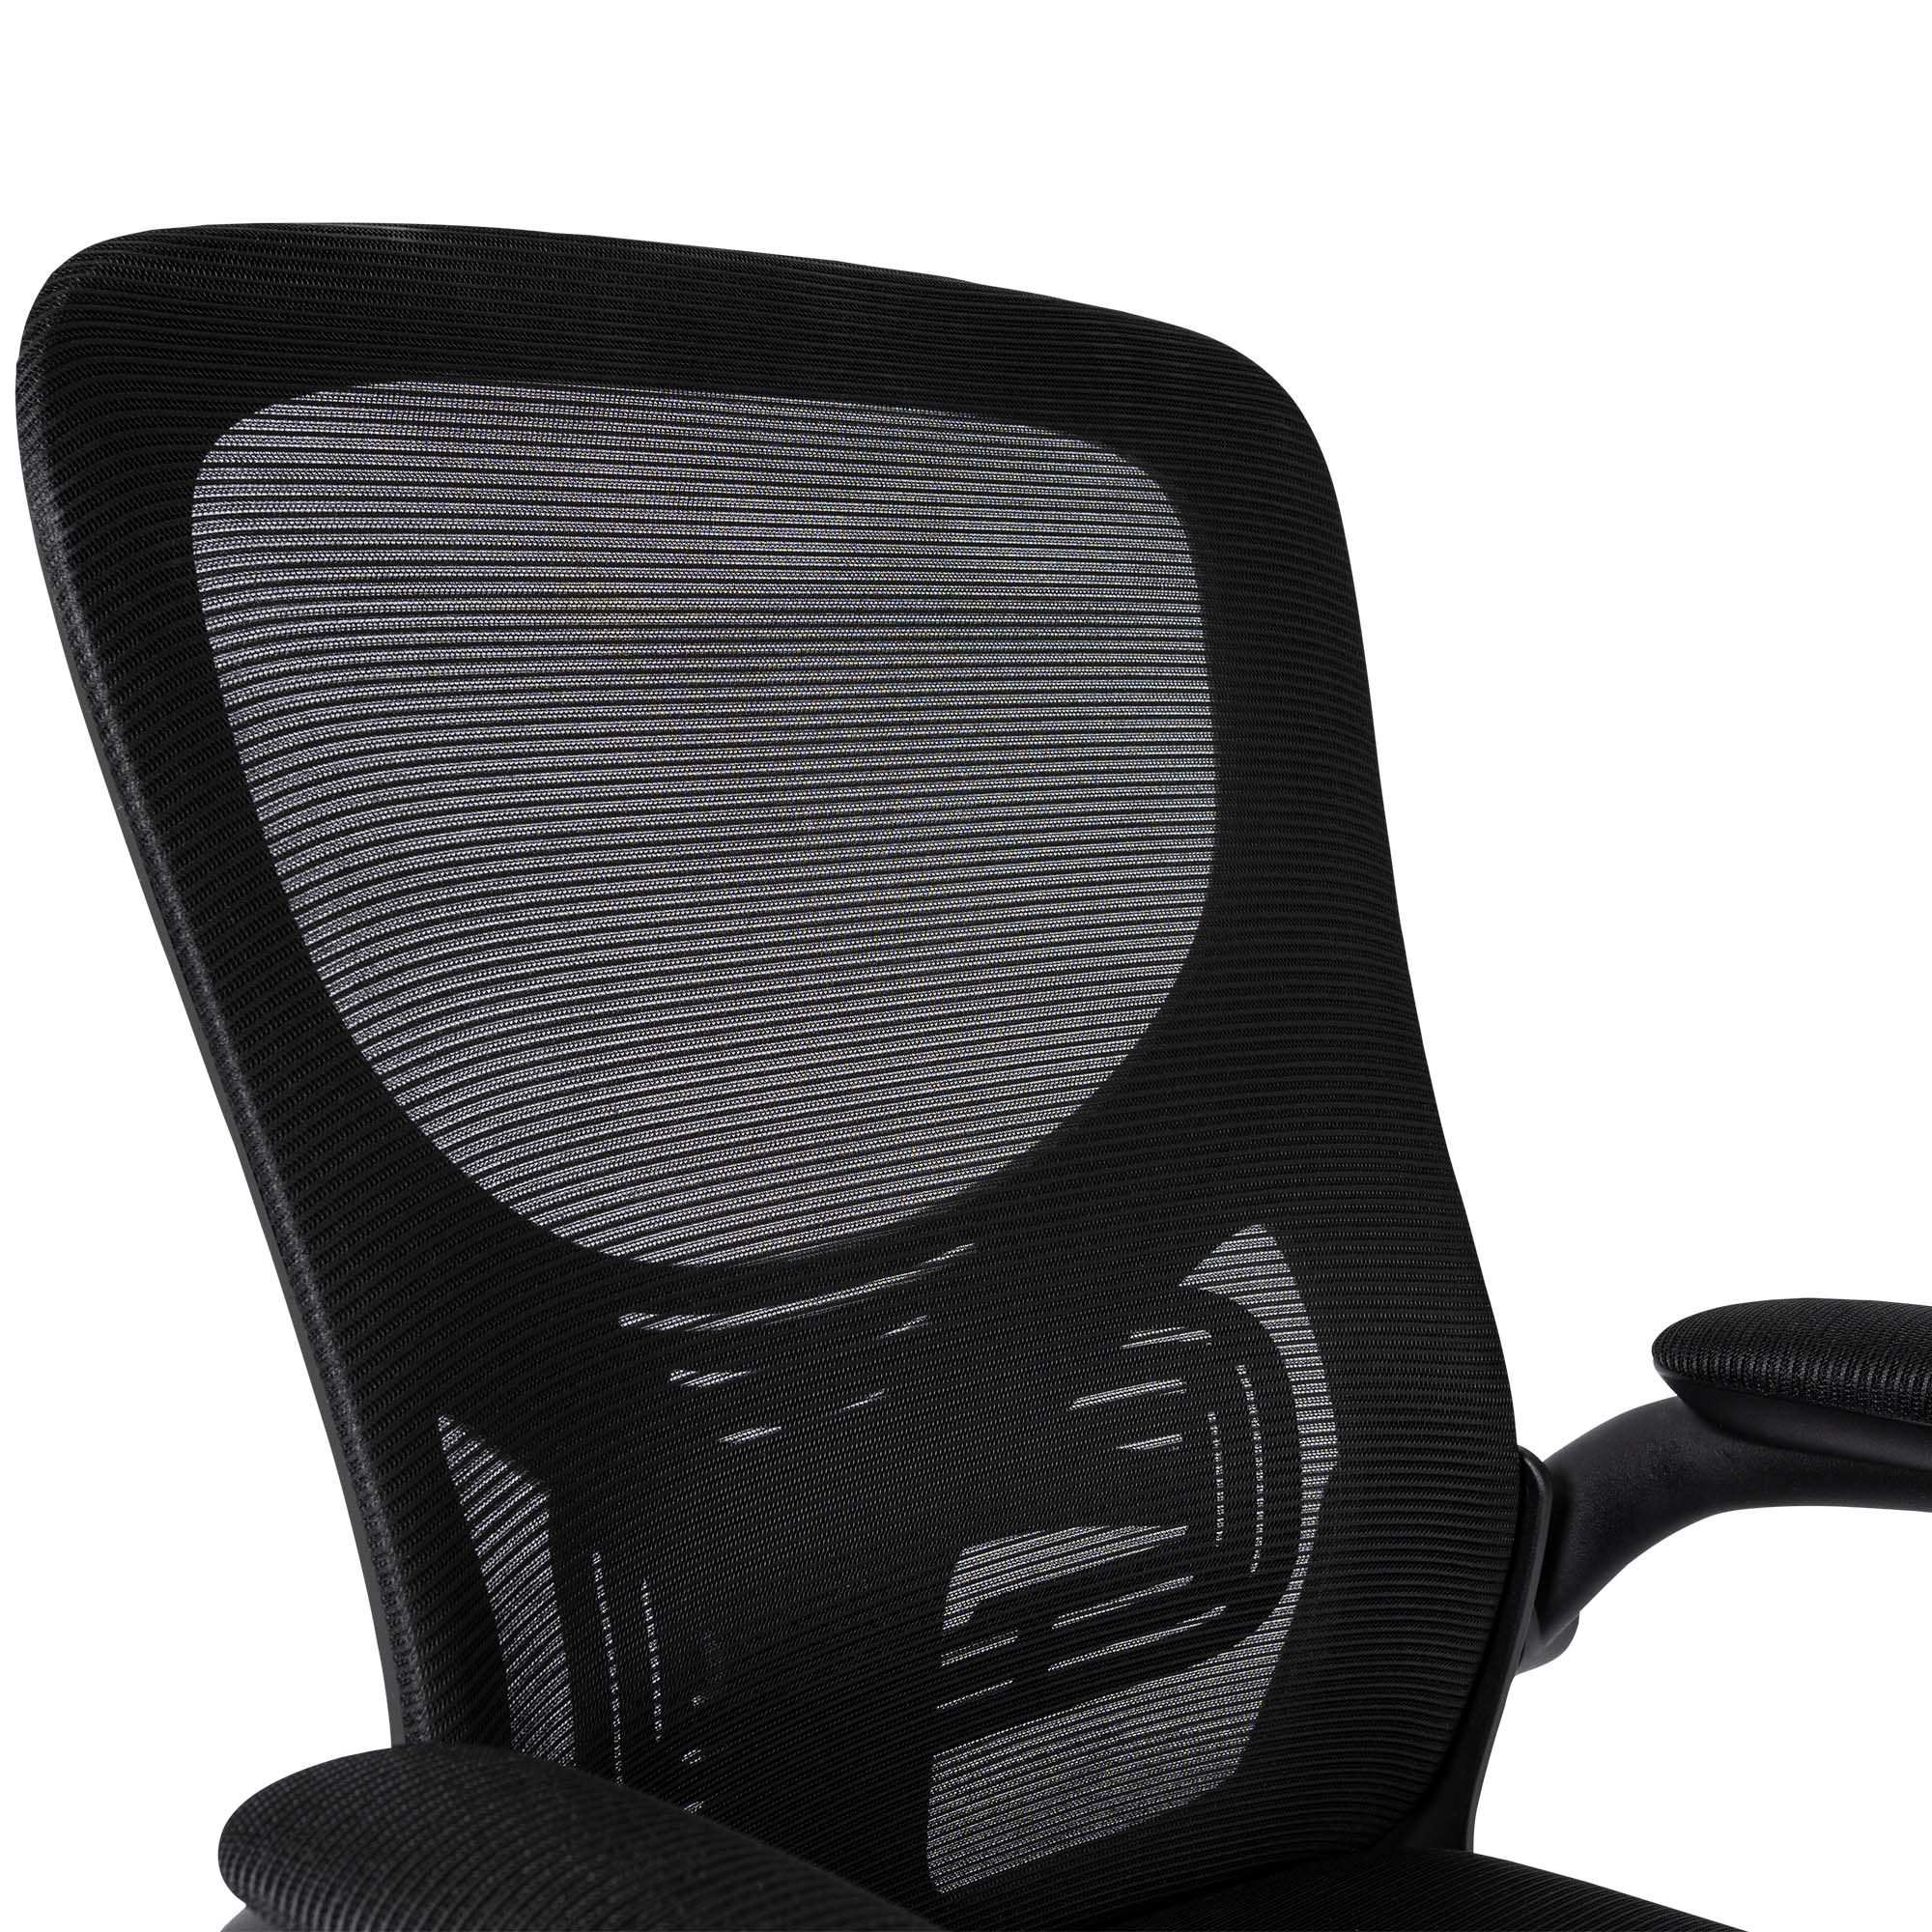 Ergodu Ergonomic Office Chair with Foldable Armrests - backrest